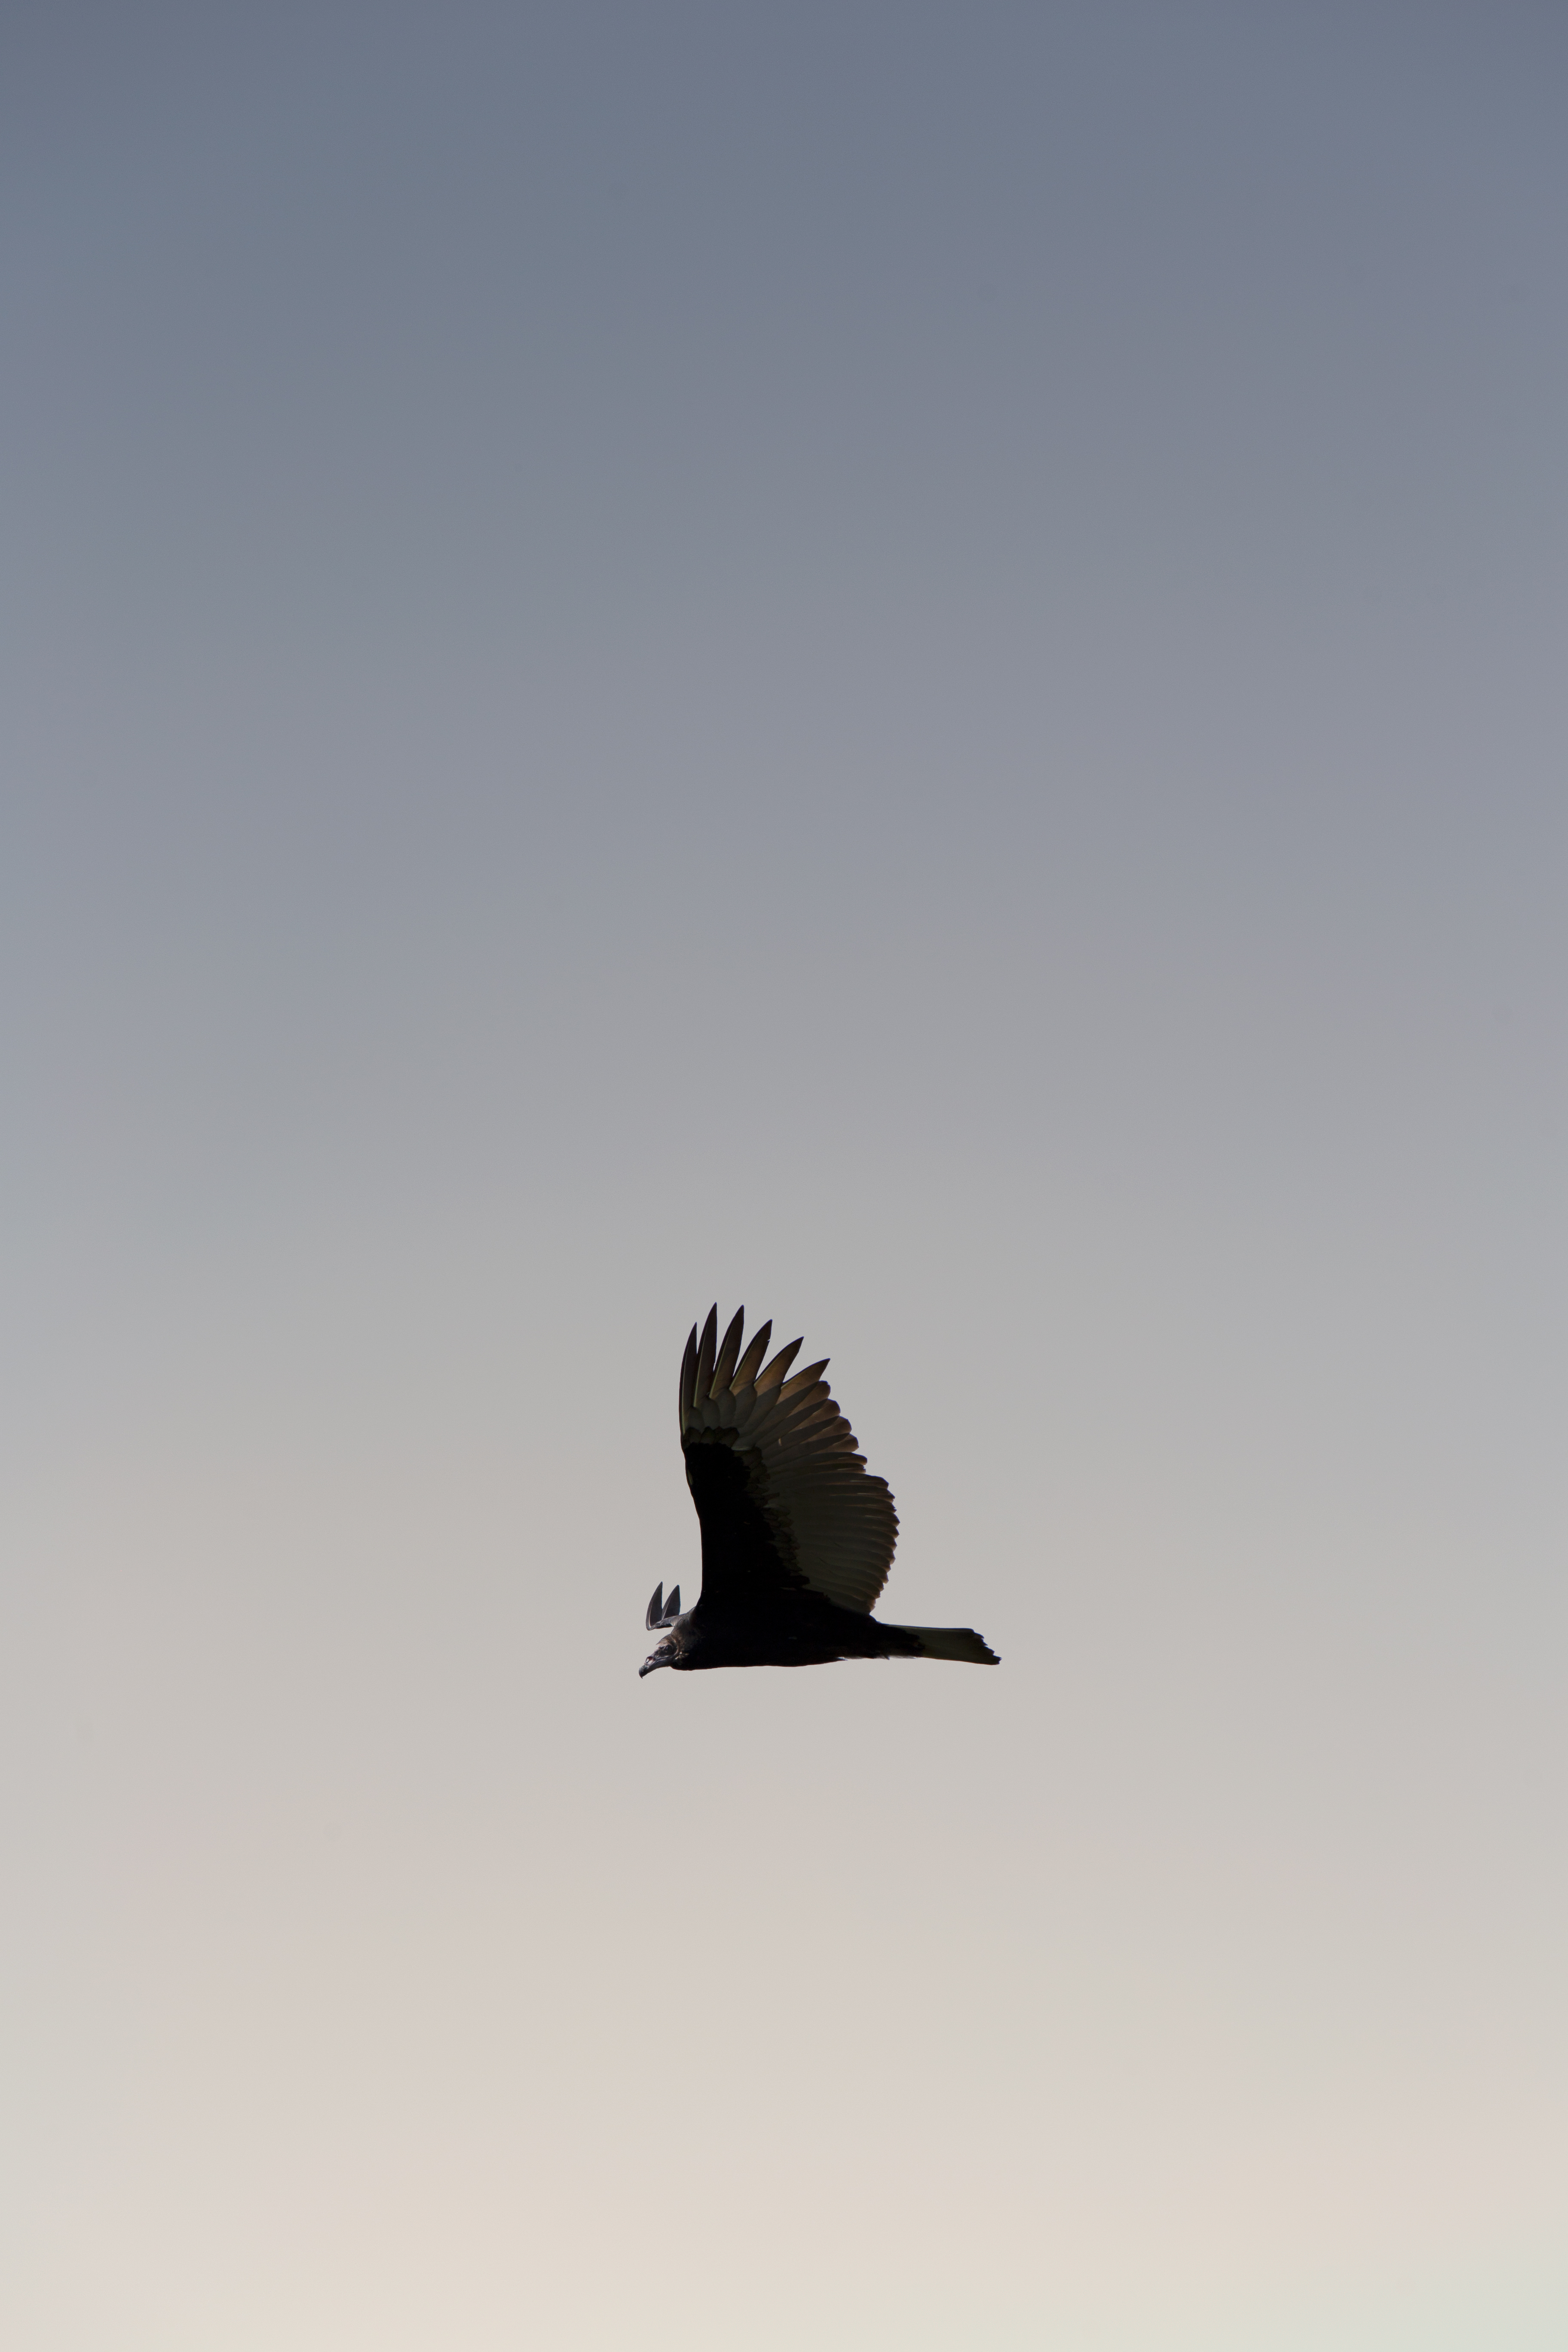 minimalism, wildlife, sky, bird, predator, flight, wings, gradient, soar